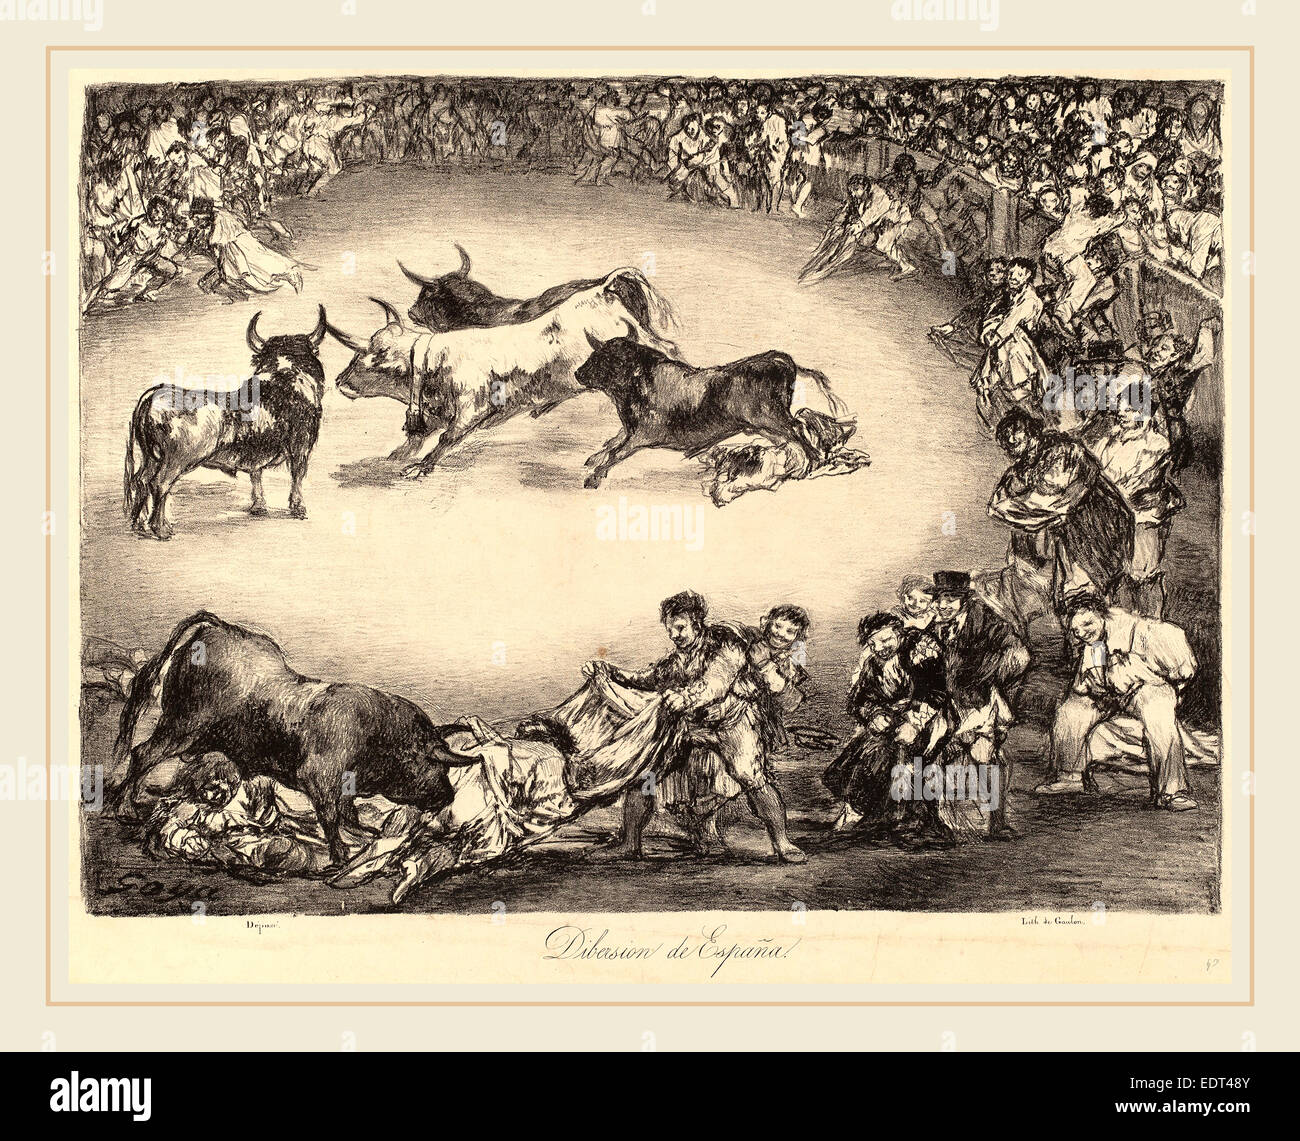 Francisco de Goya, Dibersion de España (divertimento spagnolo), Spagnolo, 1746-1828, 1825, litografia su carta intessuta Foto Stock